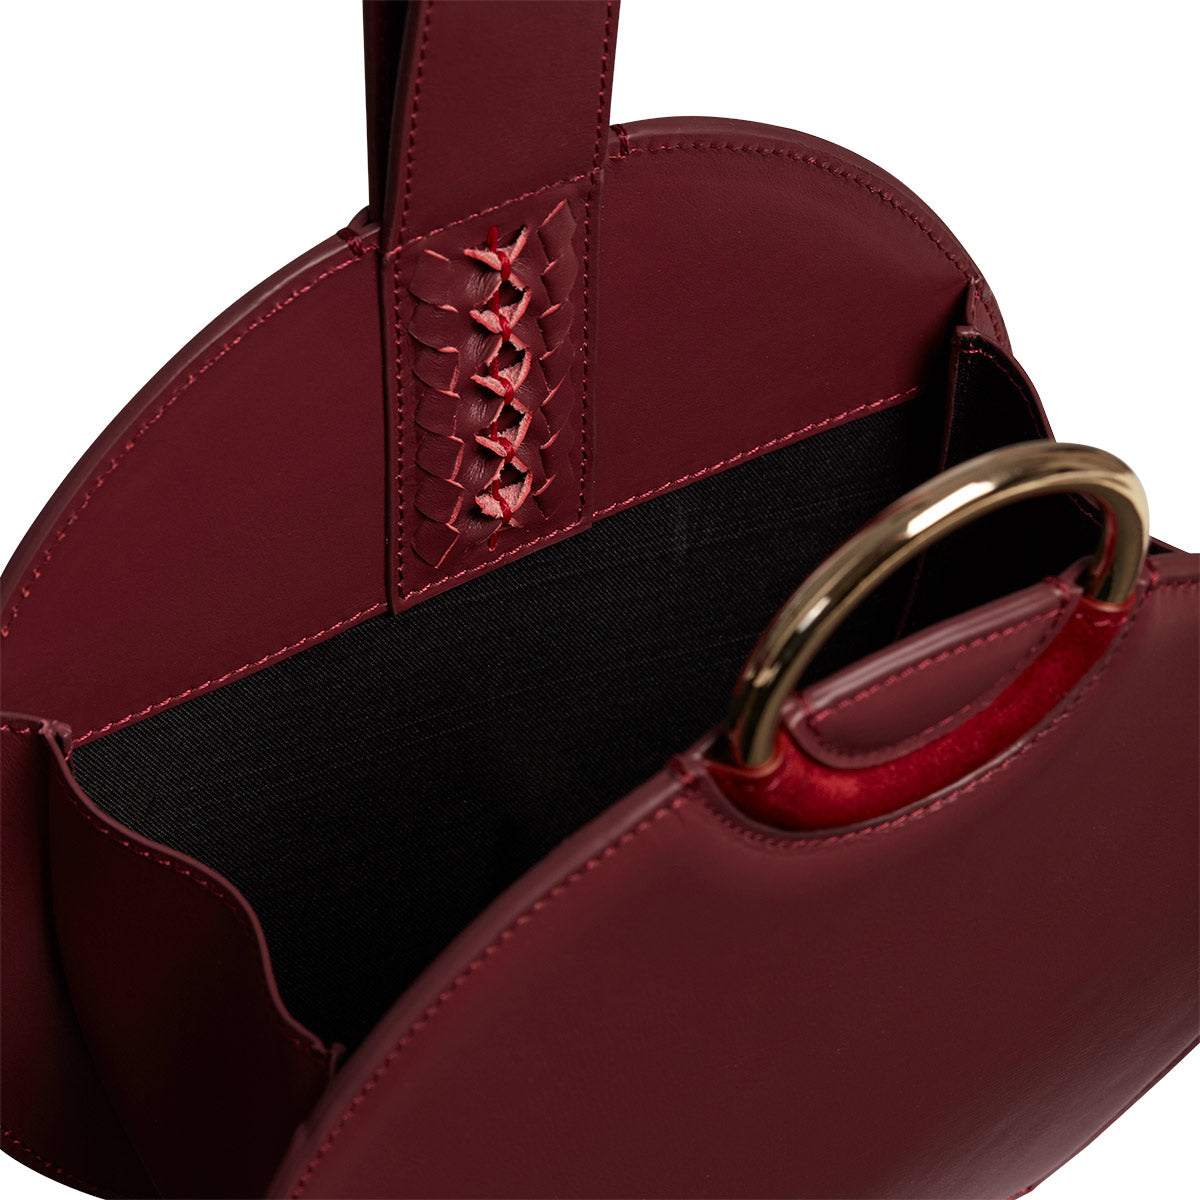 Burgundy Ring Handle Bag